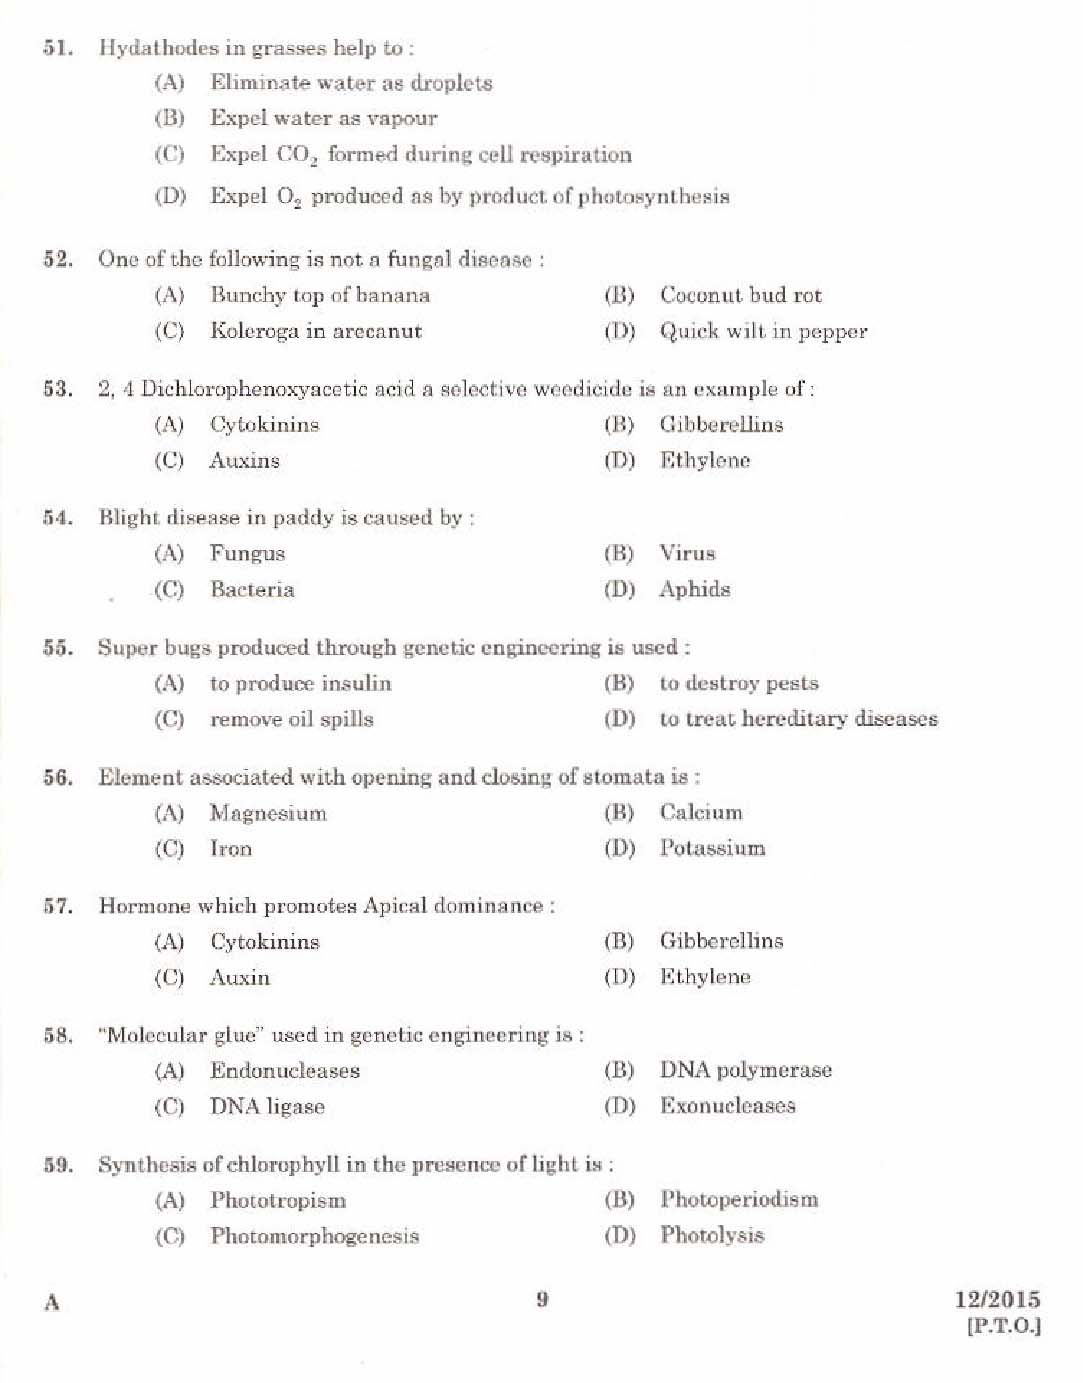 Kerala PSC Laboratory Assistant Exam 2015 Question Paper Code 122015 7